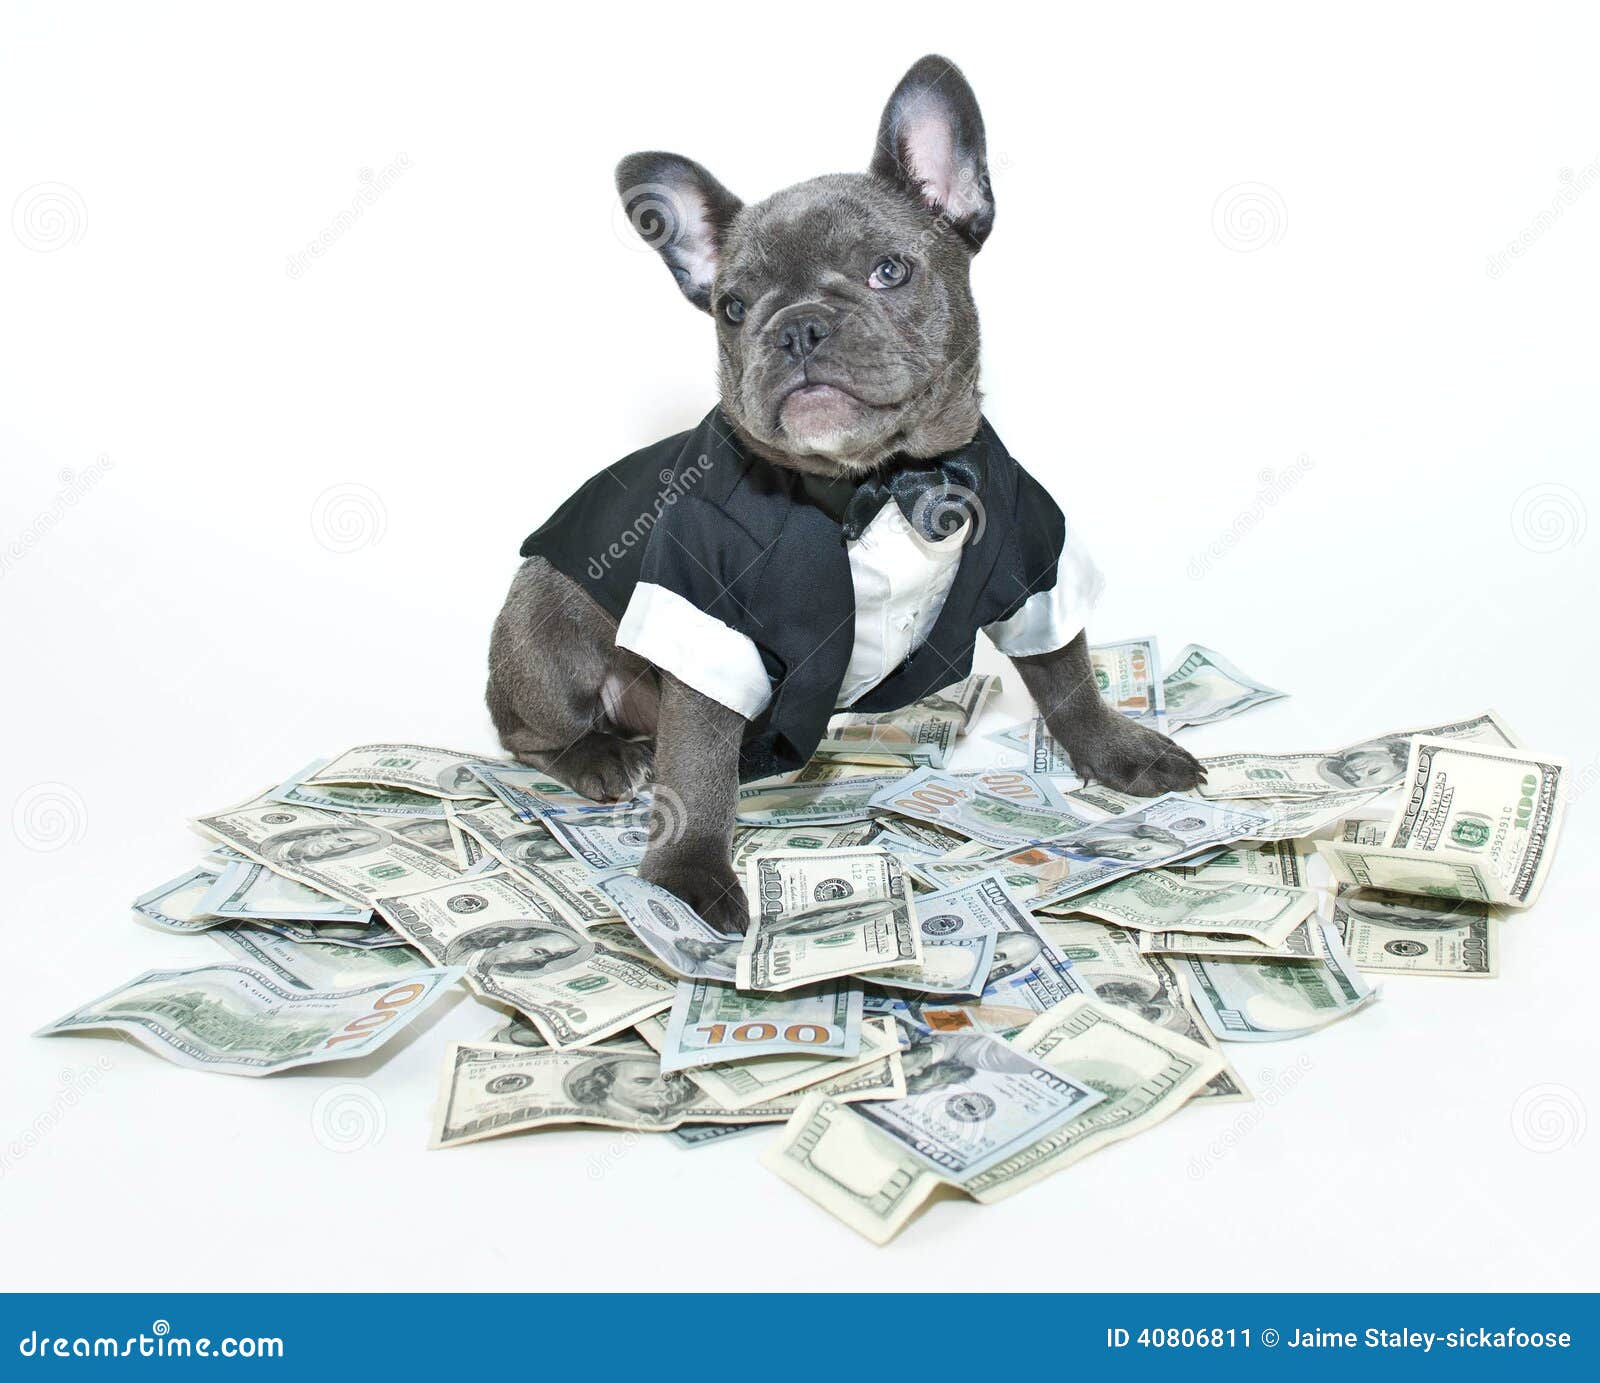 Rich Frenchbulldog stock image. Image of greed, proud - 40806811